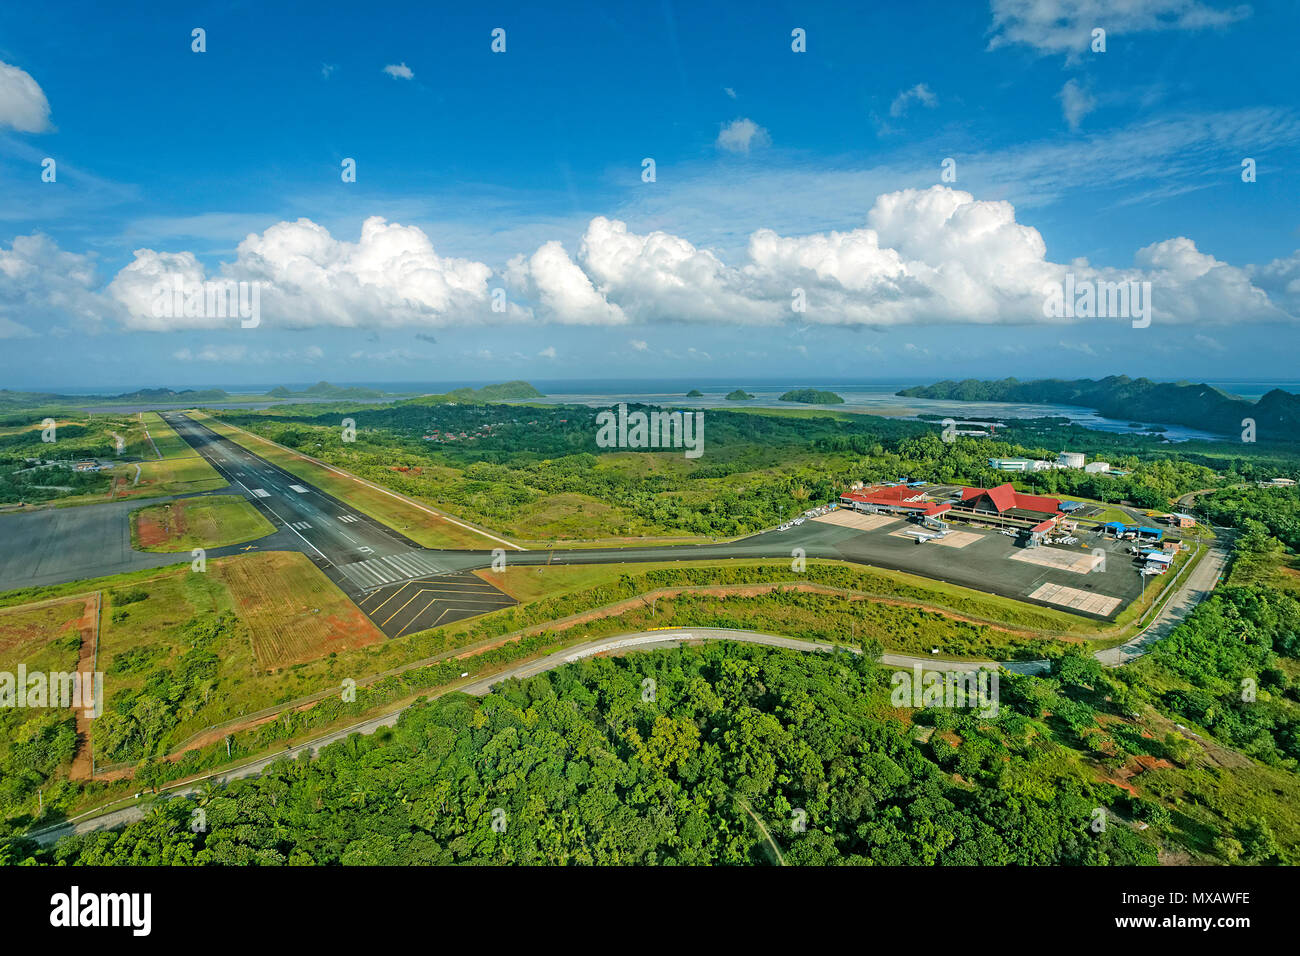 Luftaufnahme vom Flughafen und Landebahn von Palau, Mikronesien, Asien | Aeroporto e pista di Palau, vista aerea, Micronesia, Asia Foto Stock